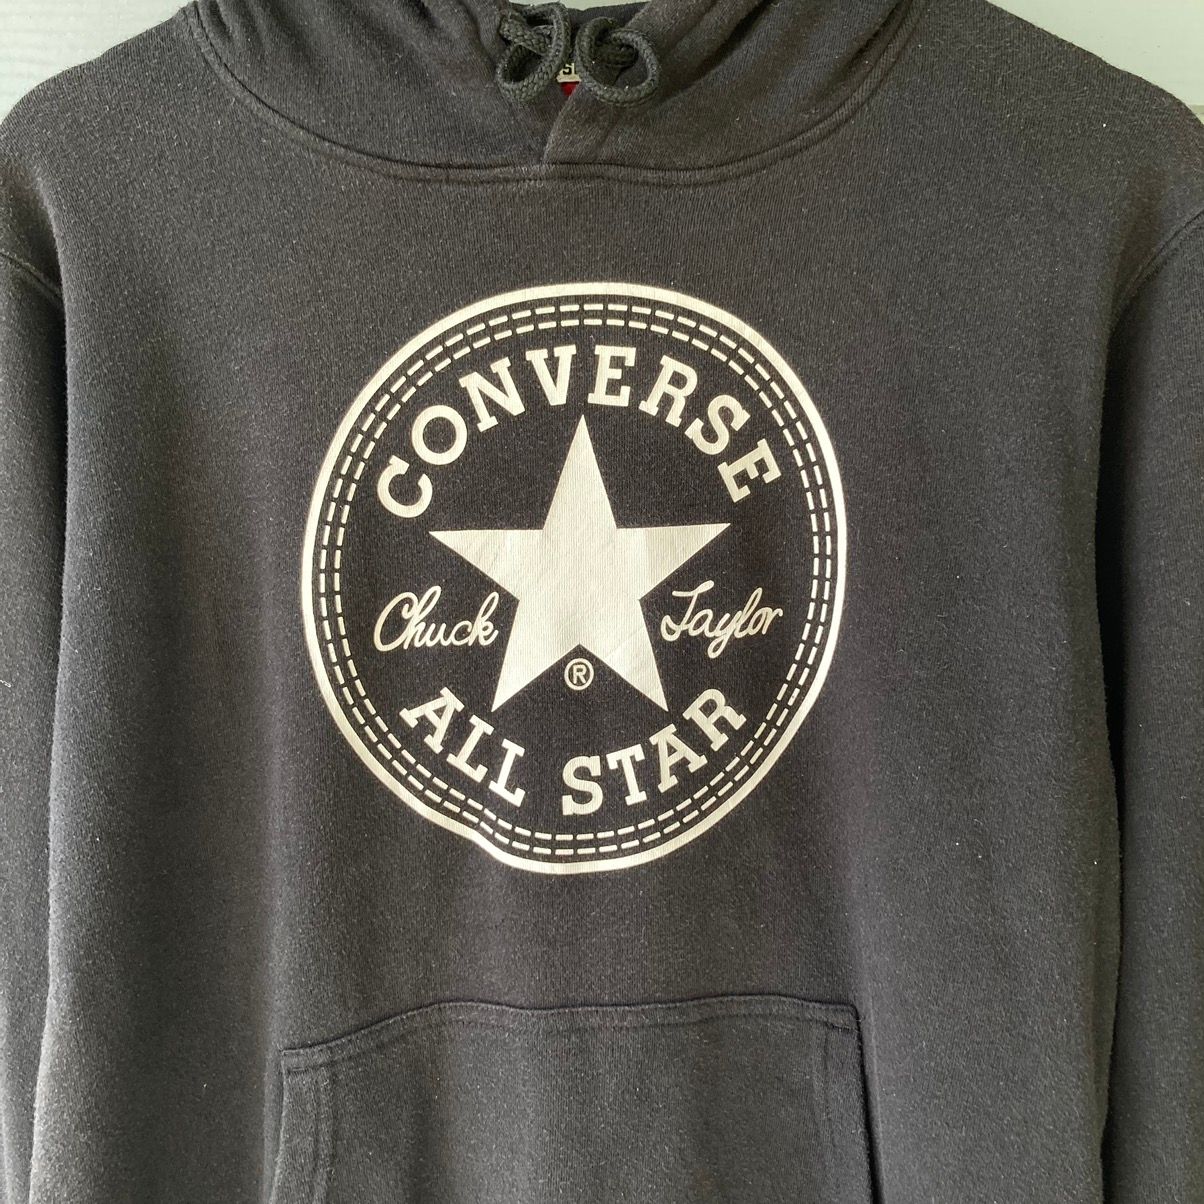 Vintage - 90s Converse All Star Hoodies - 4